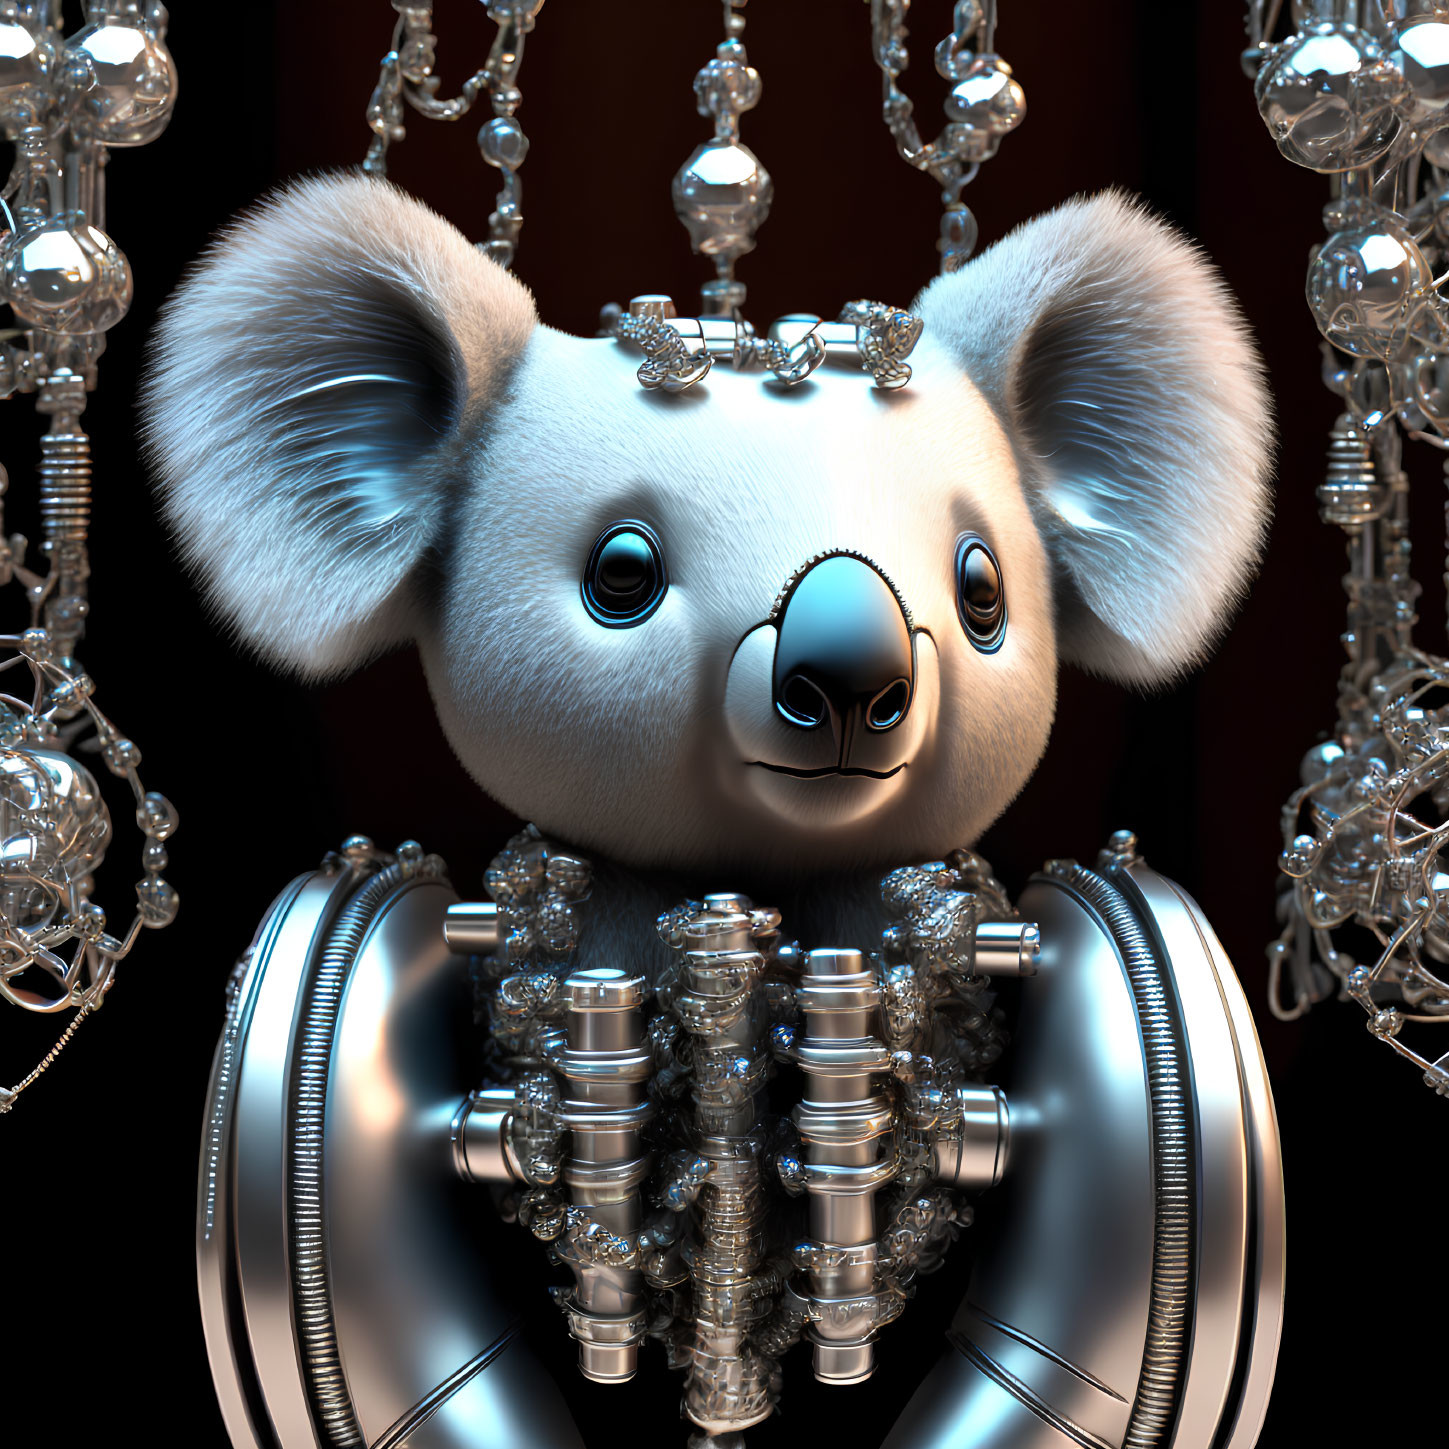 Whimsical robotic koala with metal body and crystal chandeliers